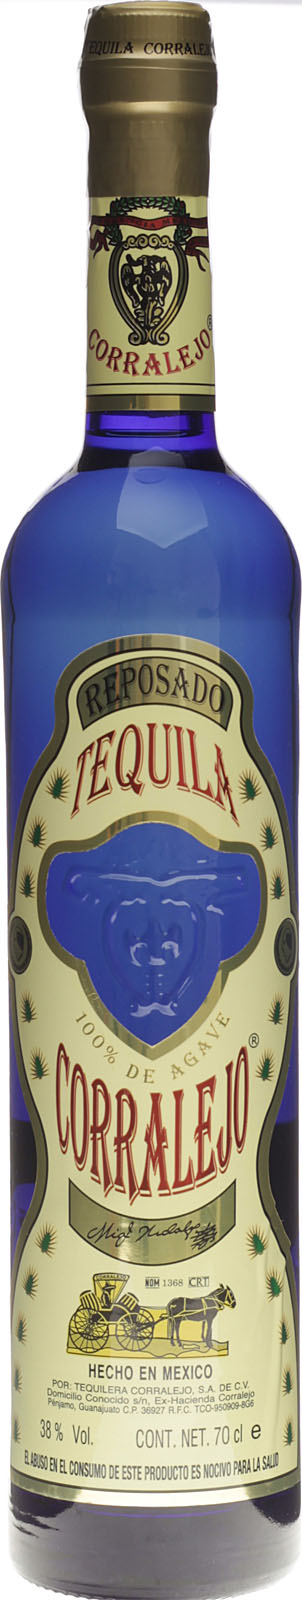 Reposado kaufen hier Tequila im Corralejo Onlineshop